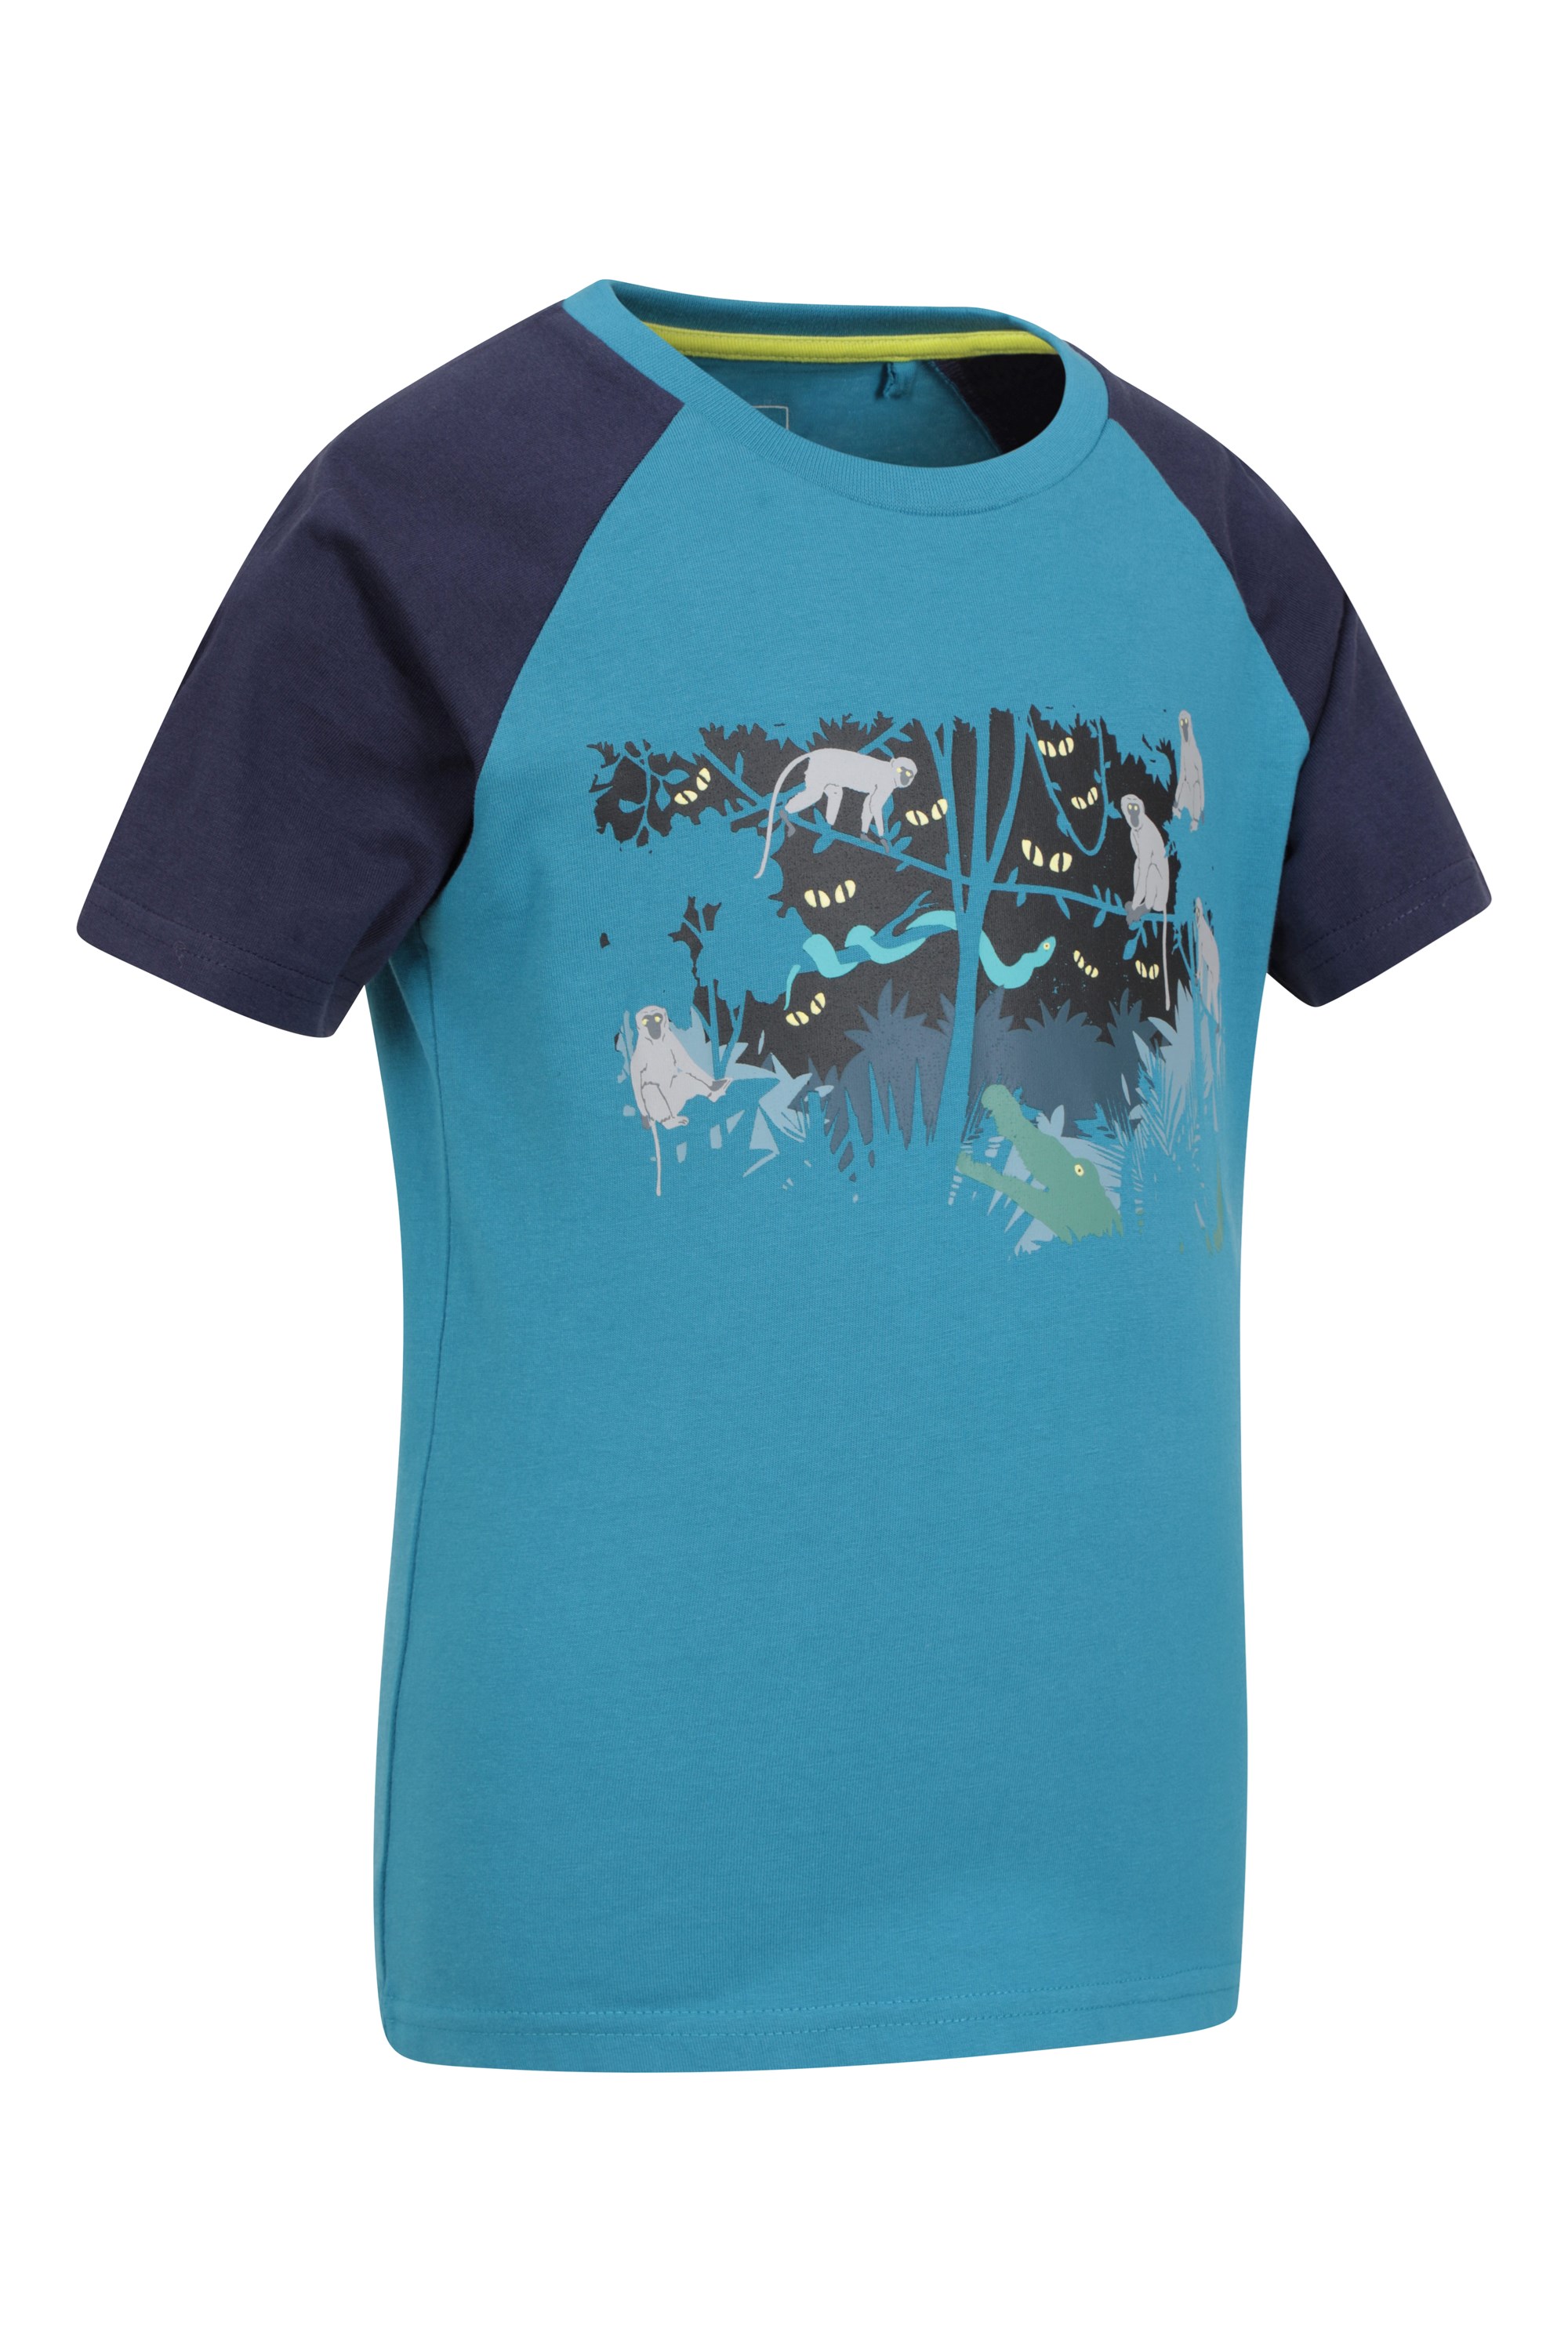 Mountain Warehouse WMS un effiloché Noeud Imprimé Femme Tee-Shirt en Bleu Marine Femme Taille 6